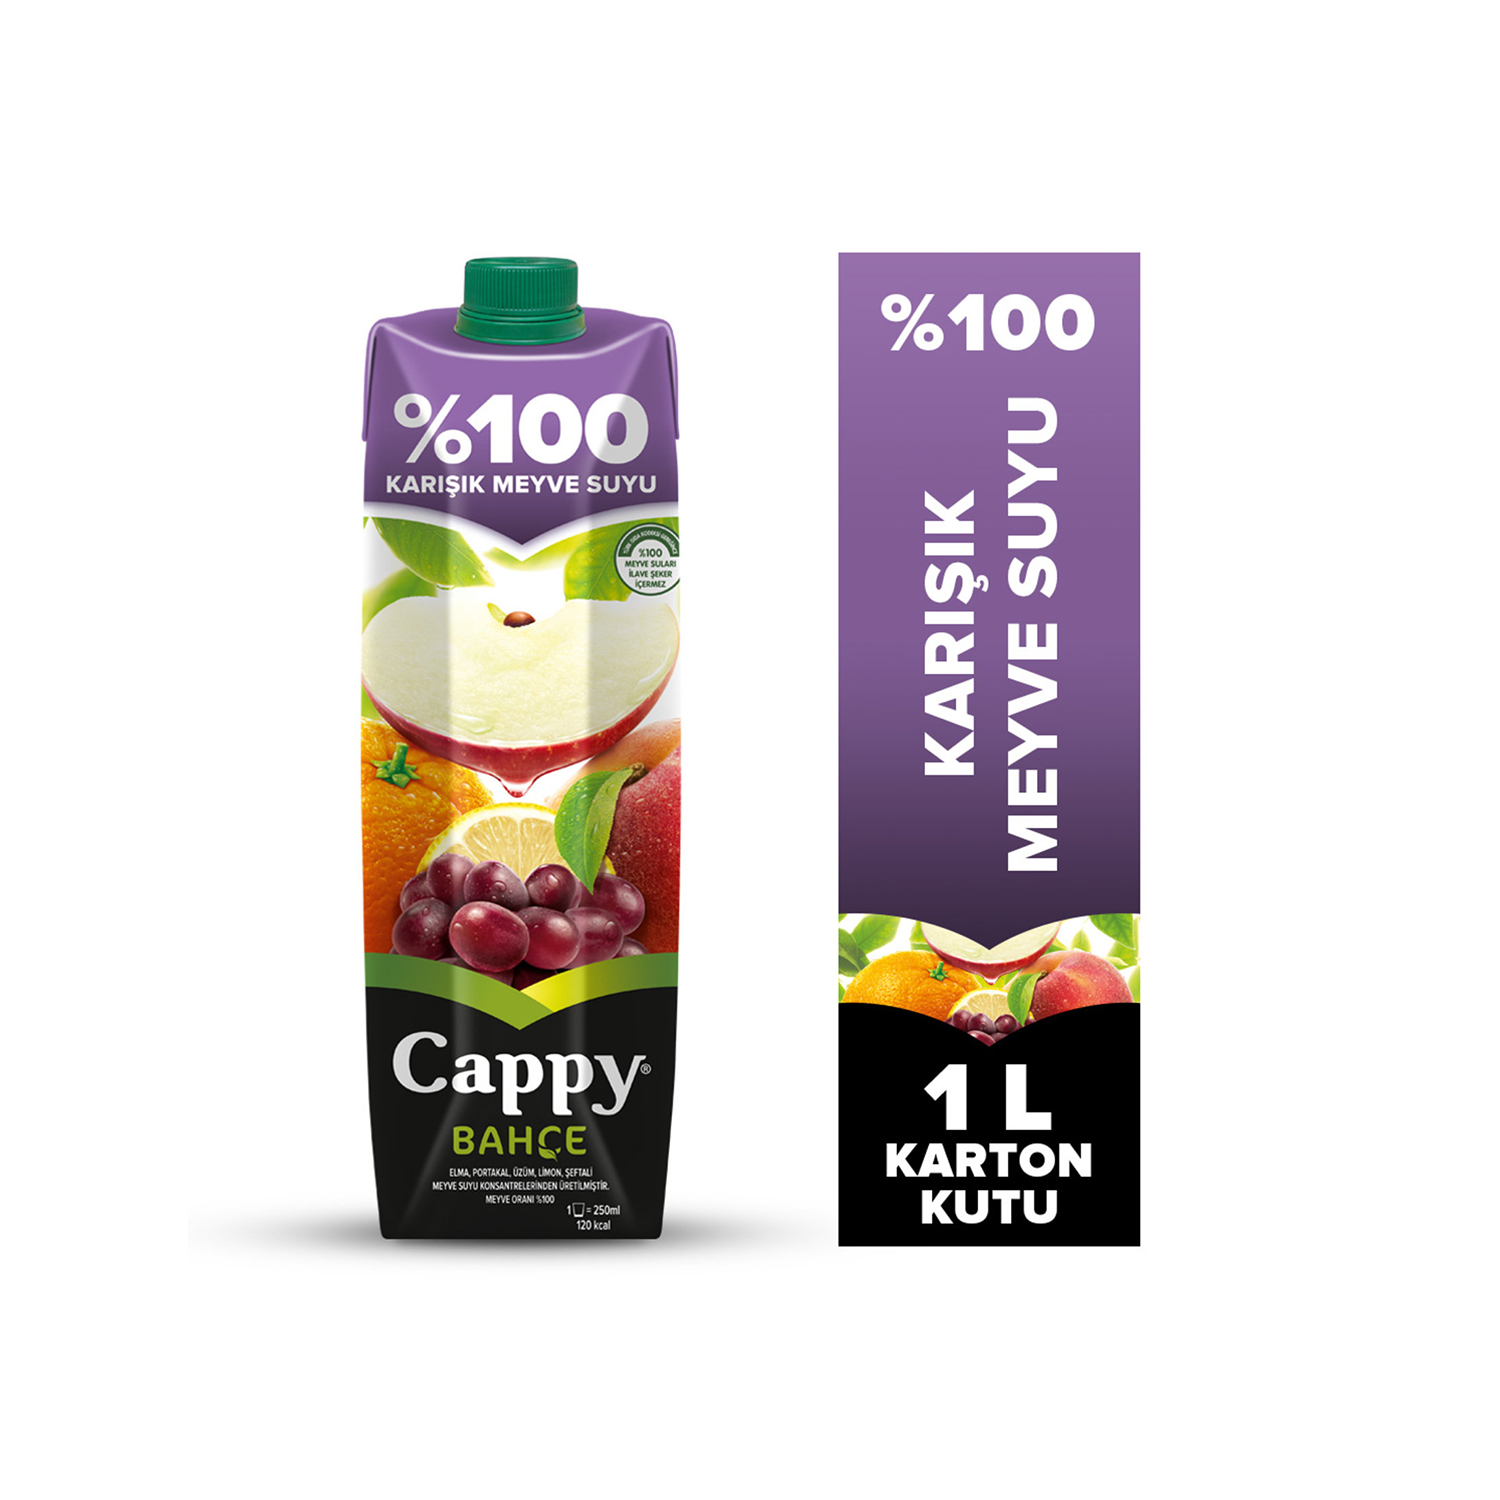 Cappy Bahçe %100 Karışık Meyve Suyu Karton Kutu 1 L